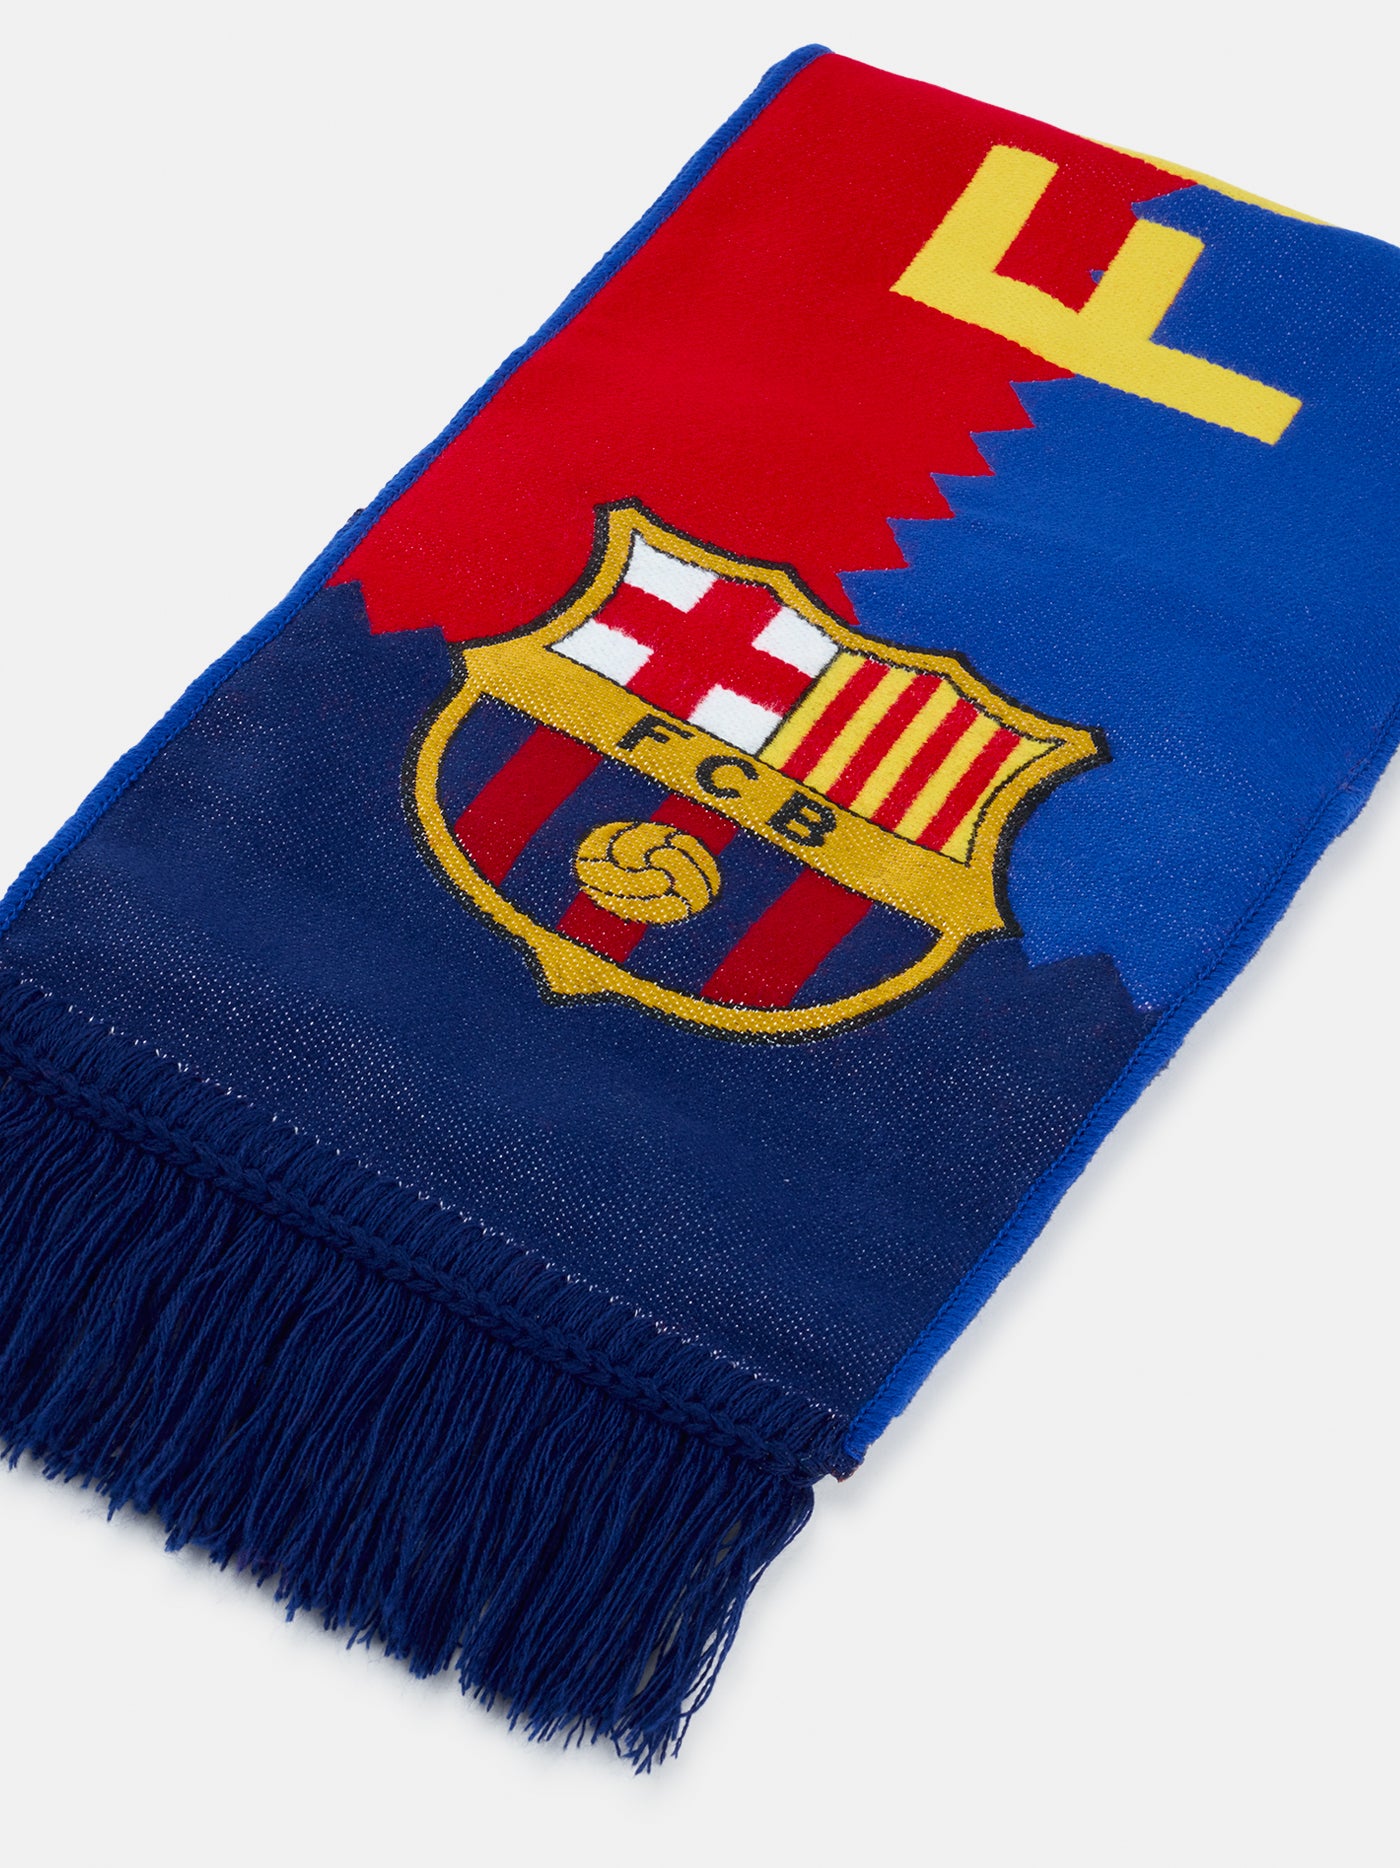 Bufanda blaugrana del FC Barcelona